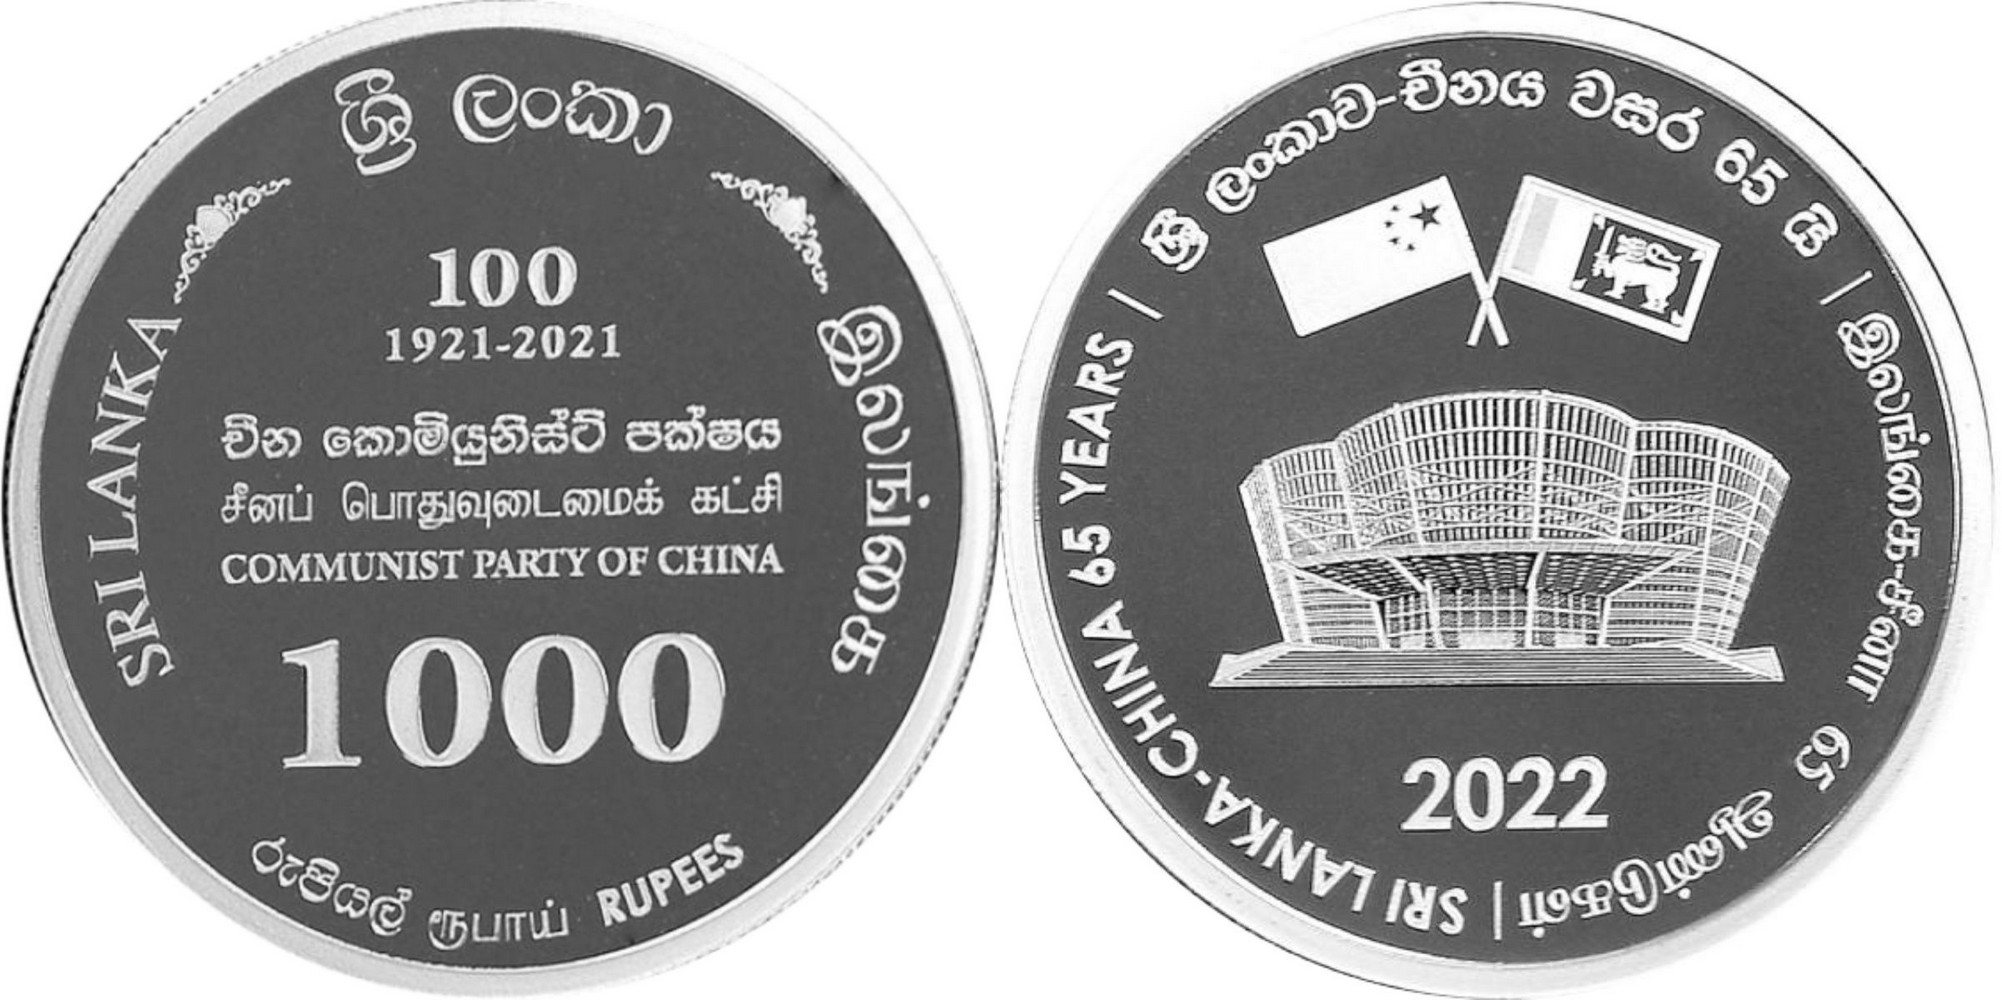 sri-lanka-2022-65-ans-du-sri-lanka-et-100-ans-de-relations-diplo.-avec-la-chine